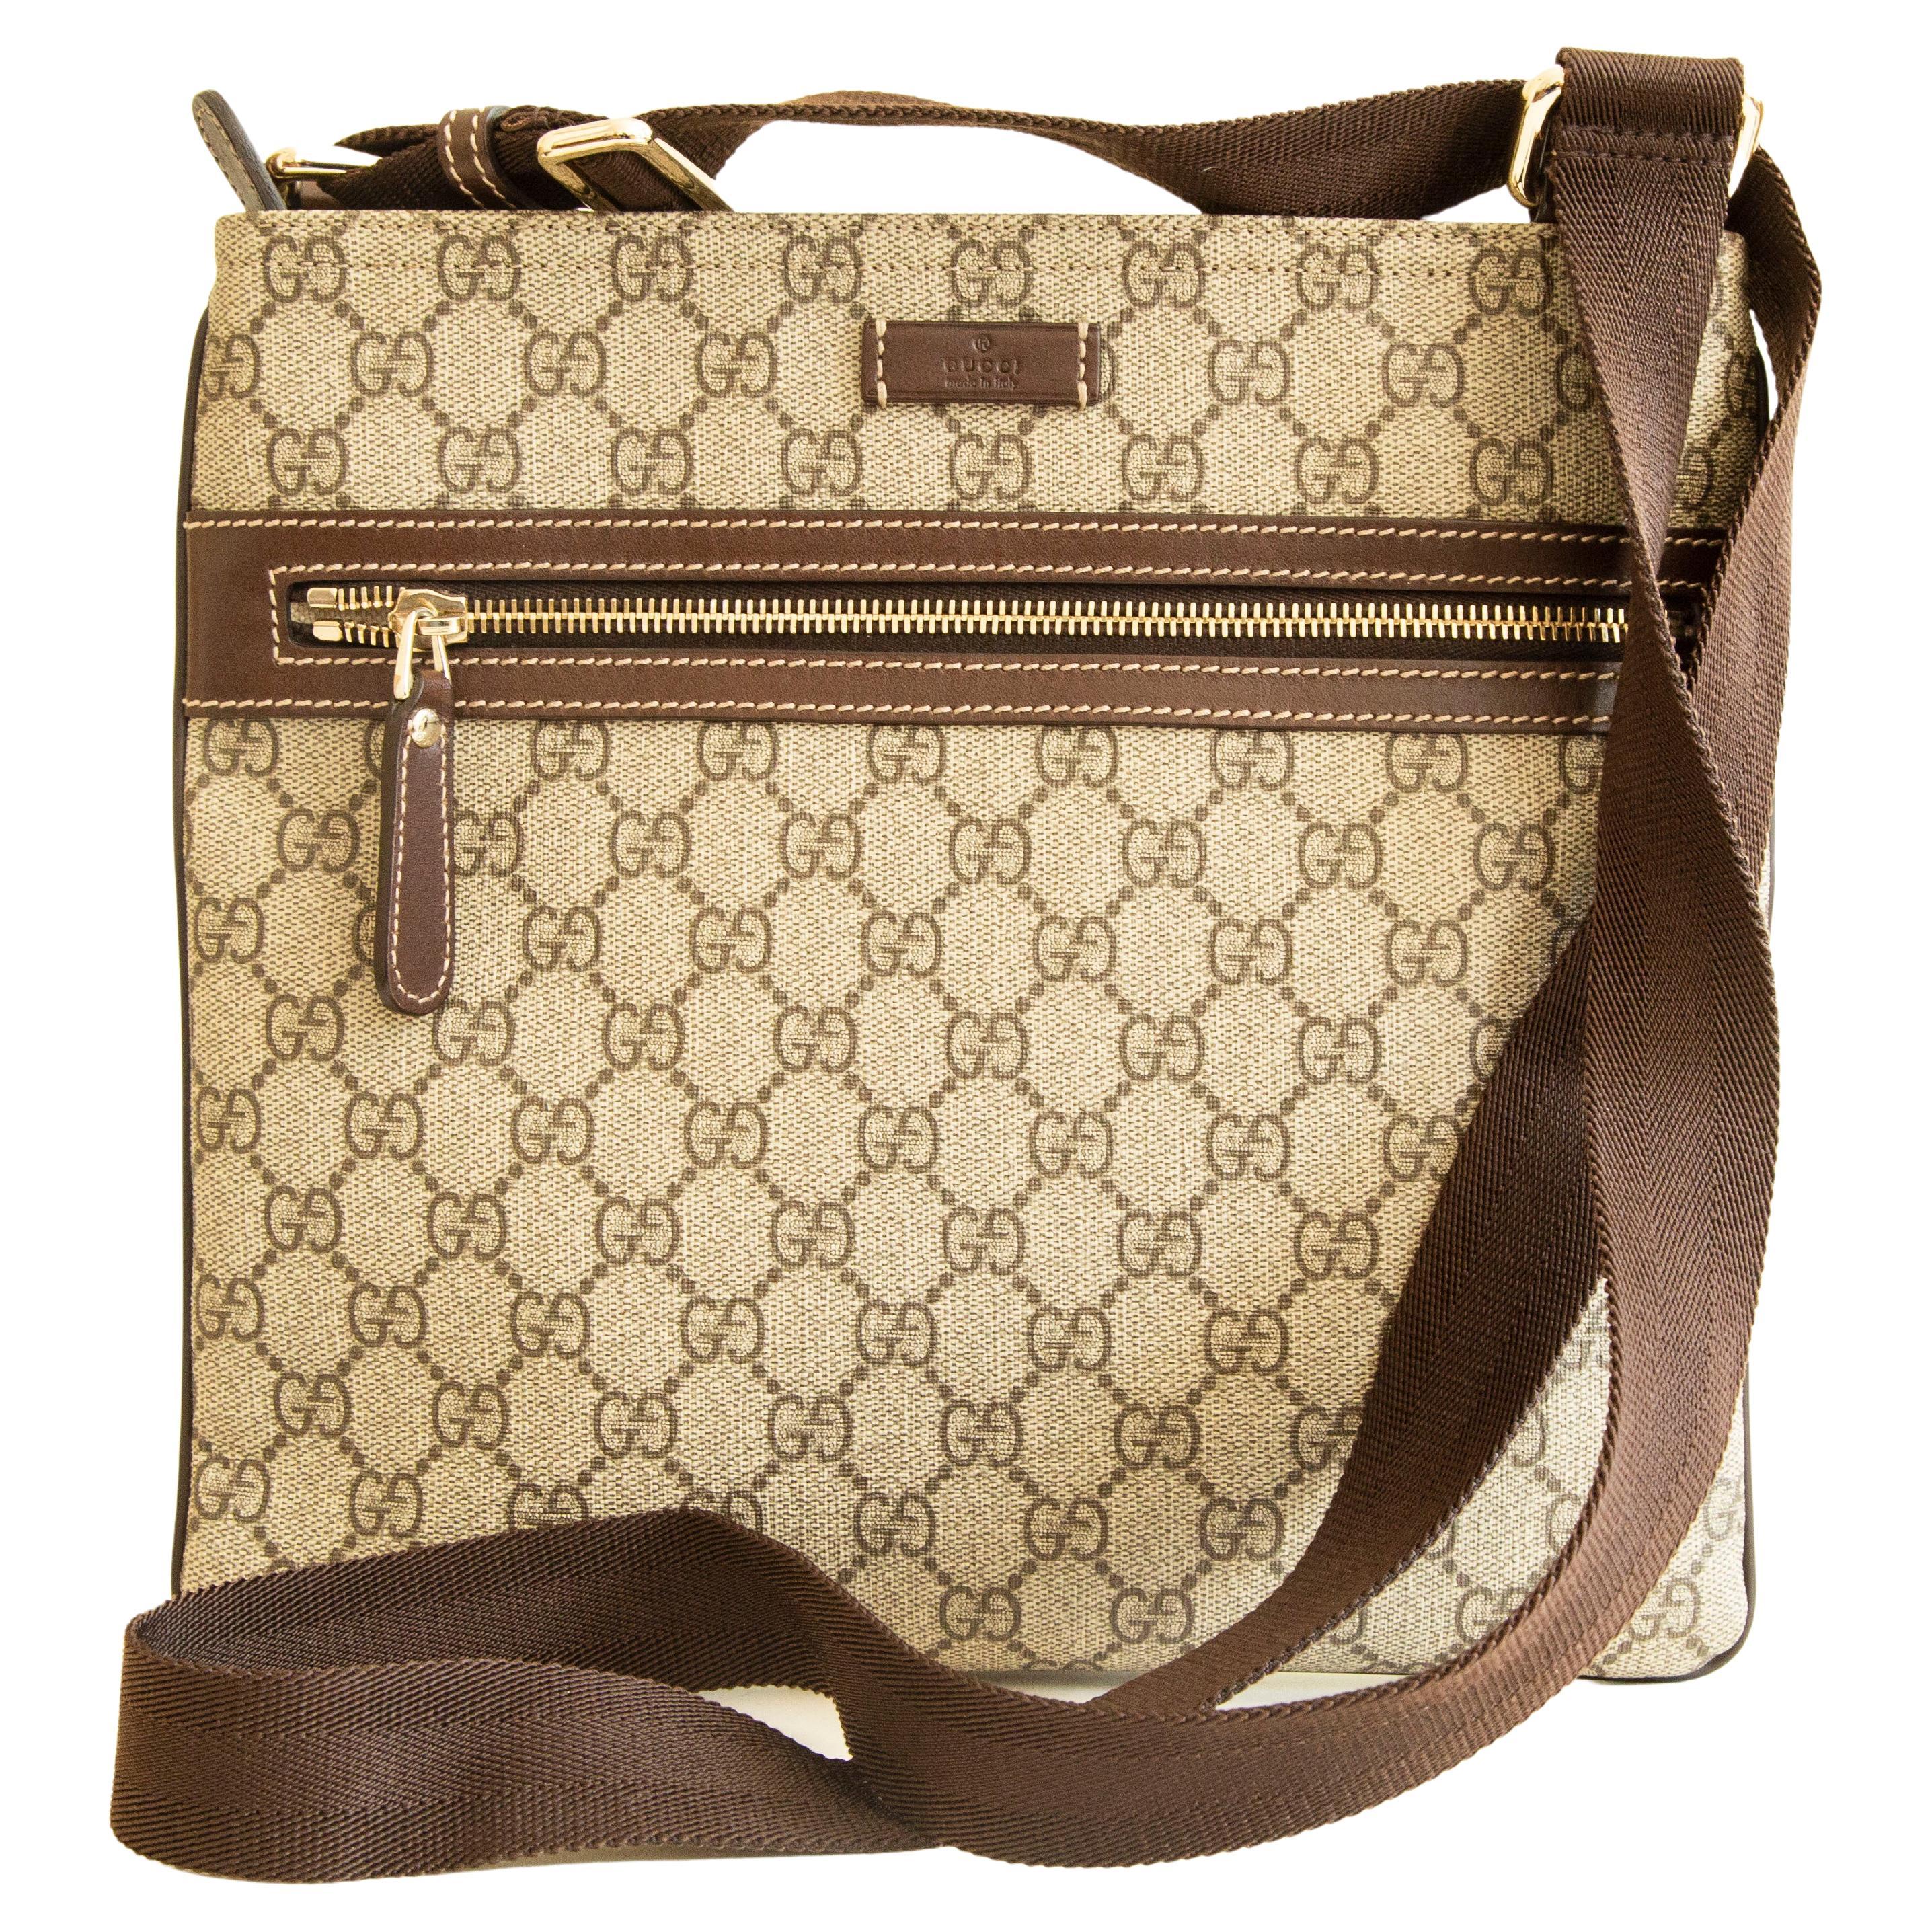 Gucci Web GG Supreme Suitcase Travel Bag - Dallas Handbags